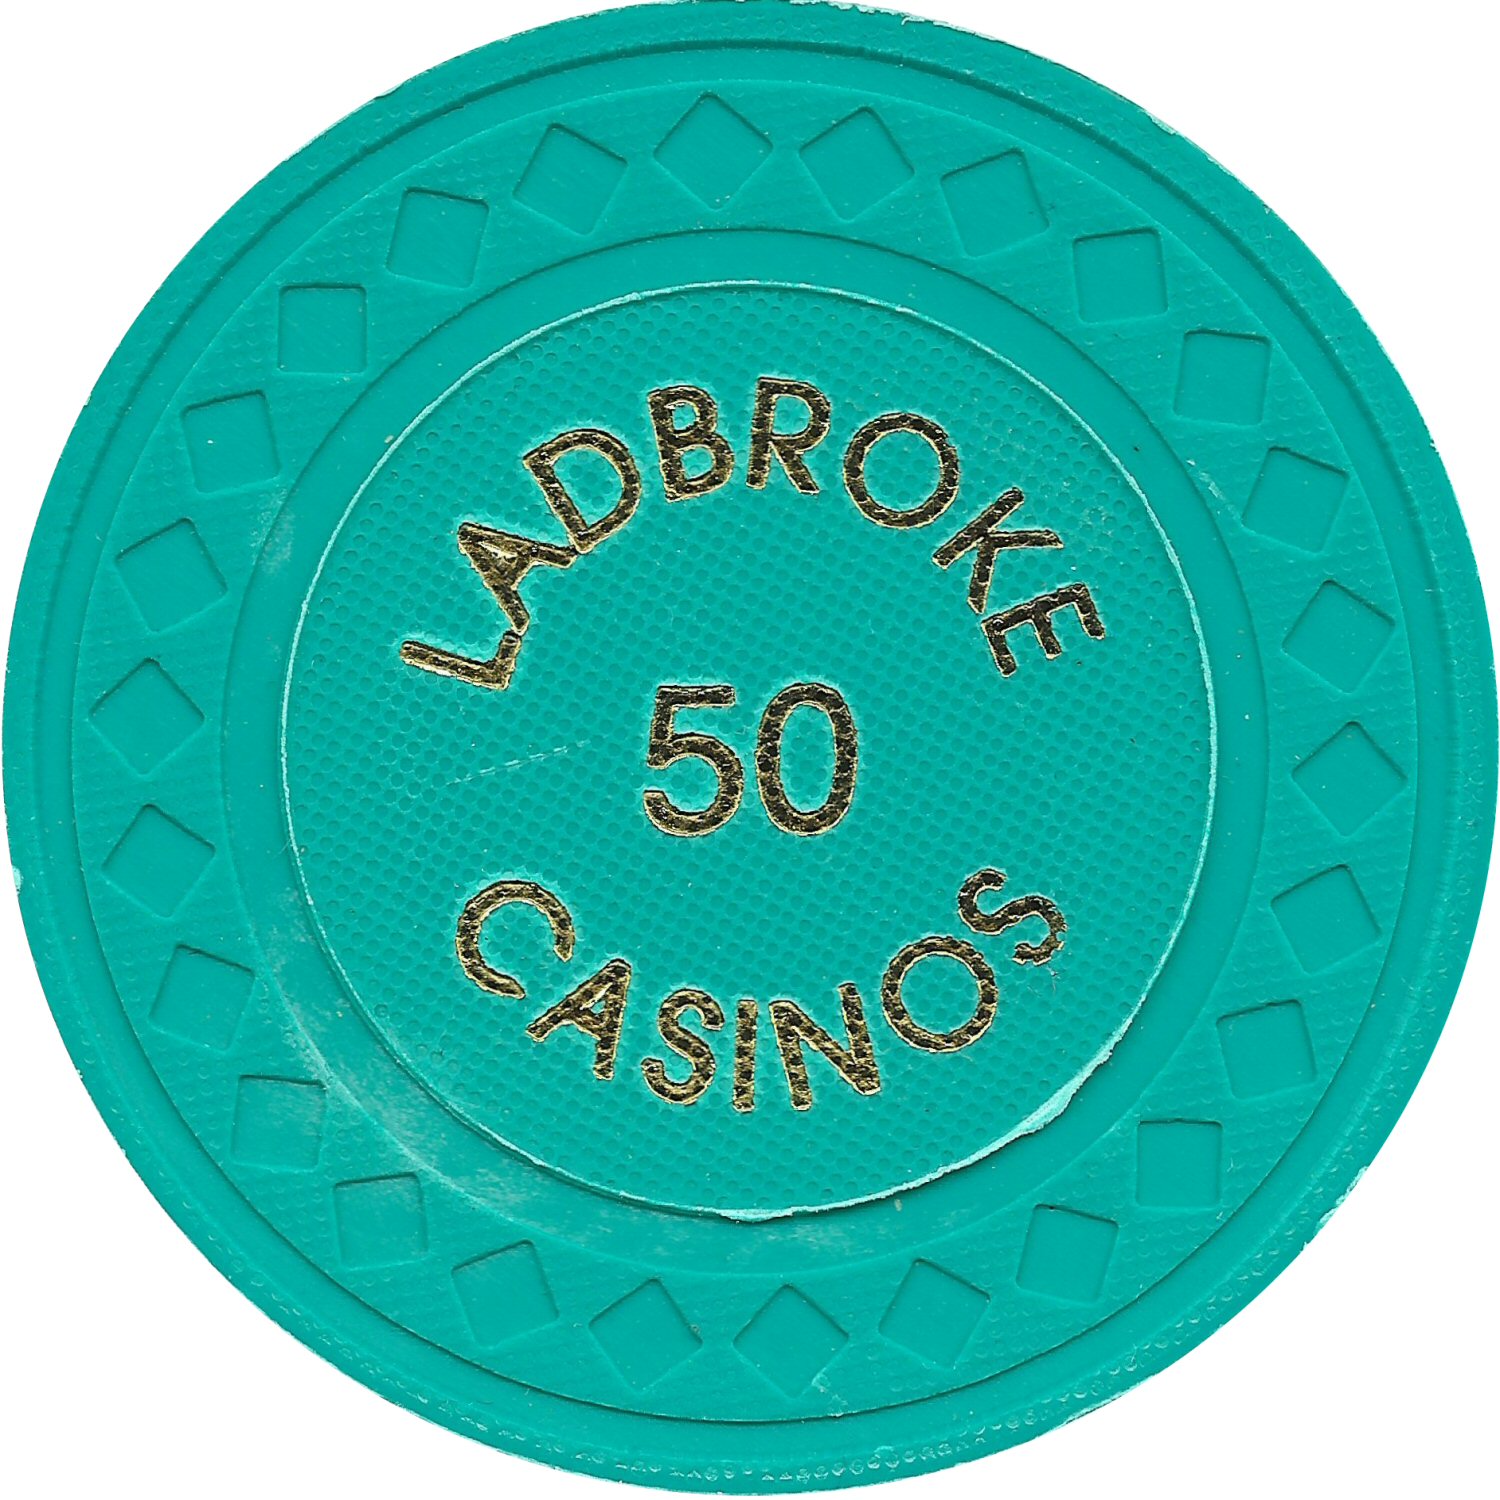 Ladbrokes casino bonus